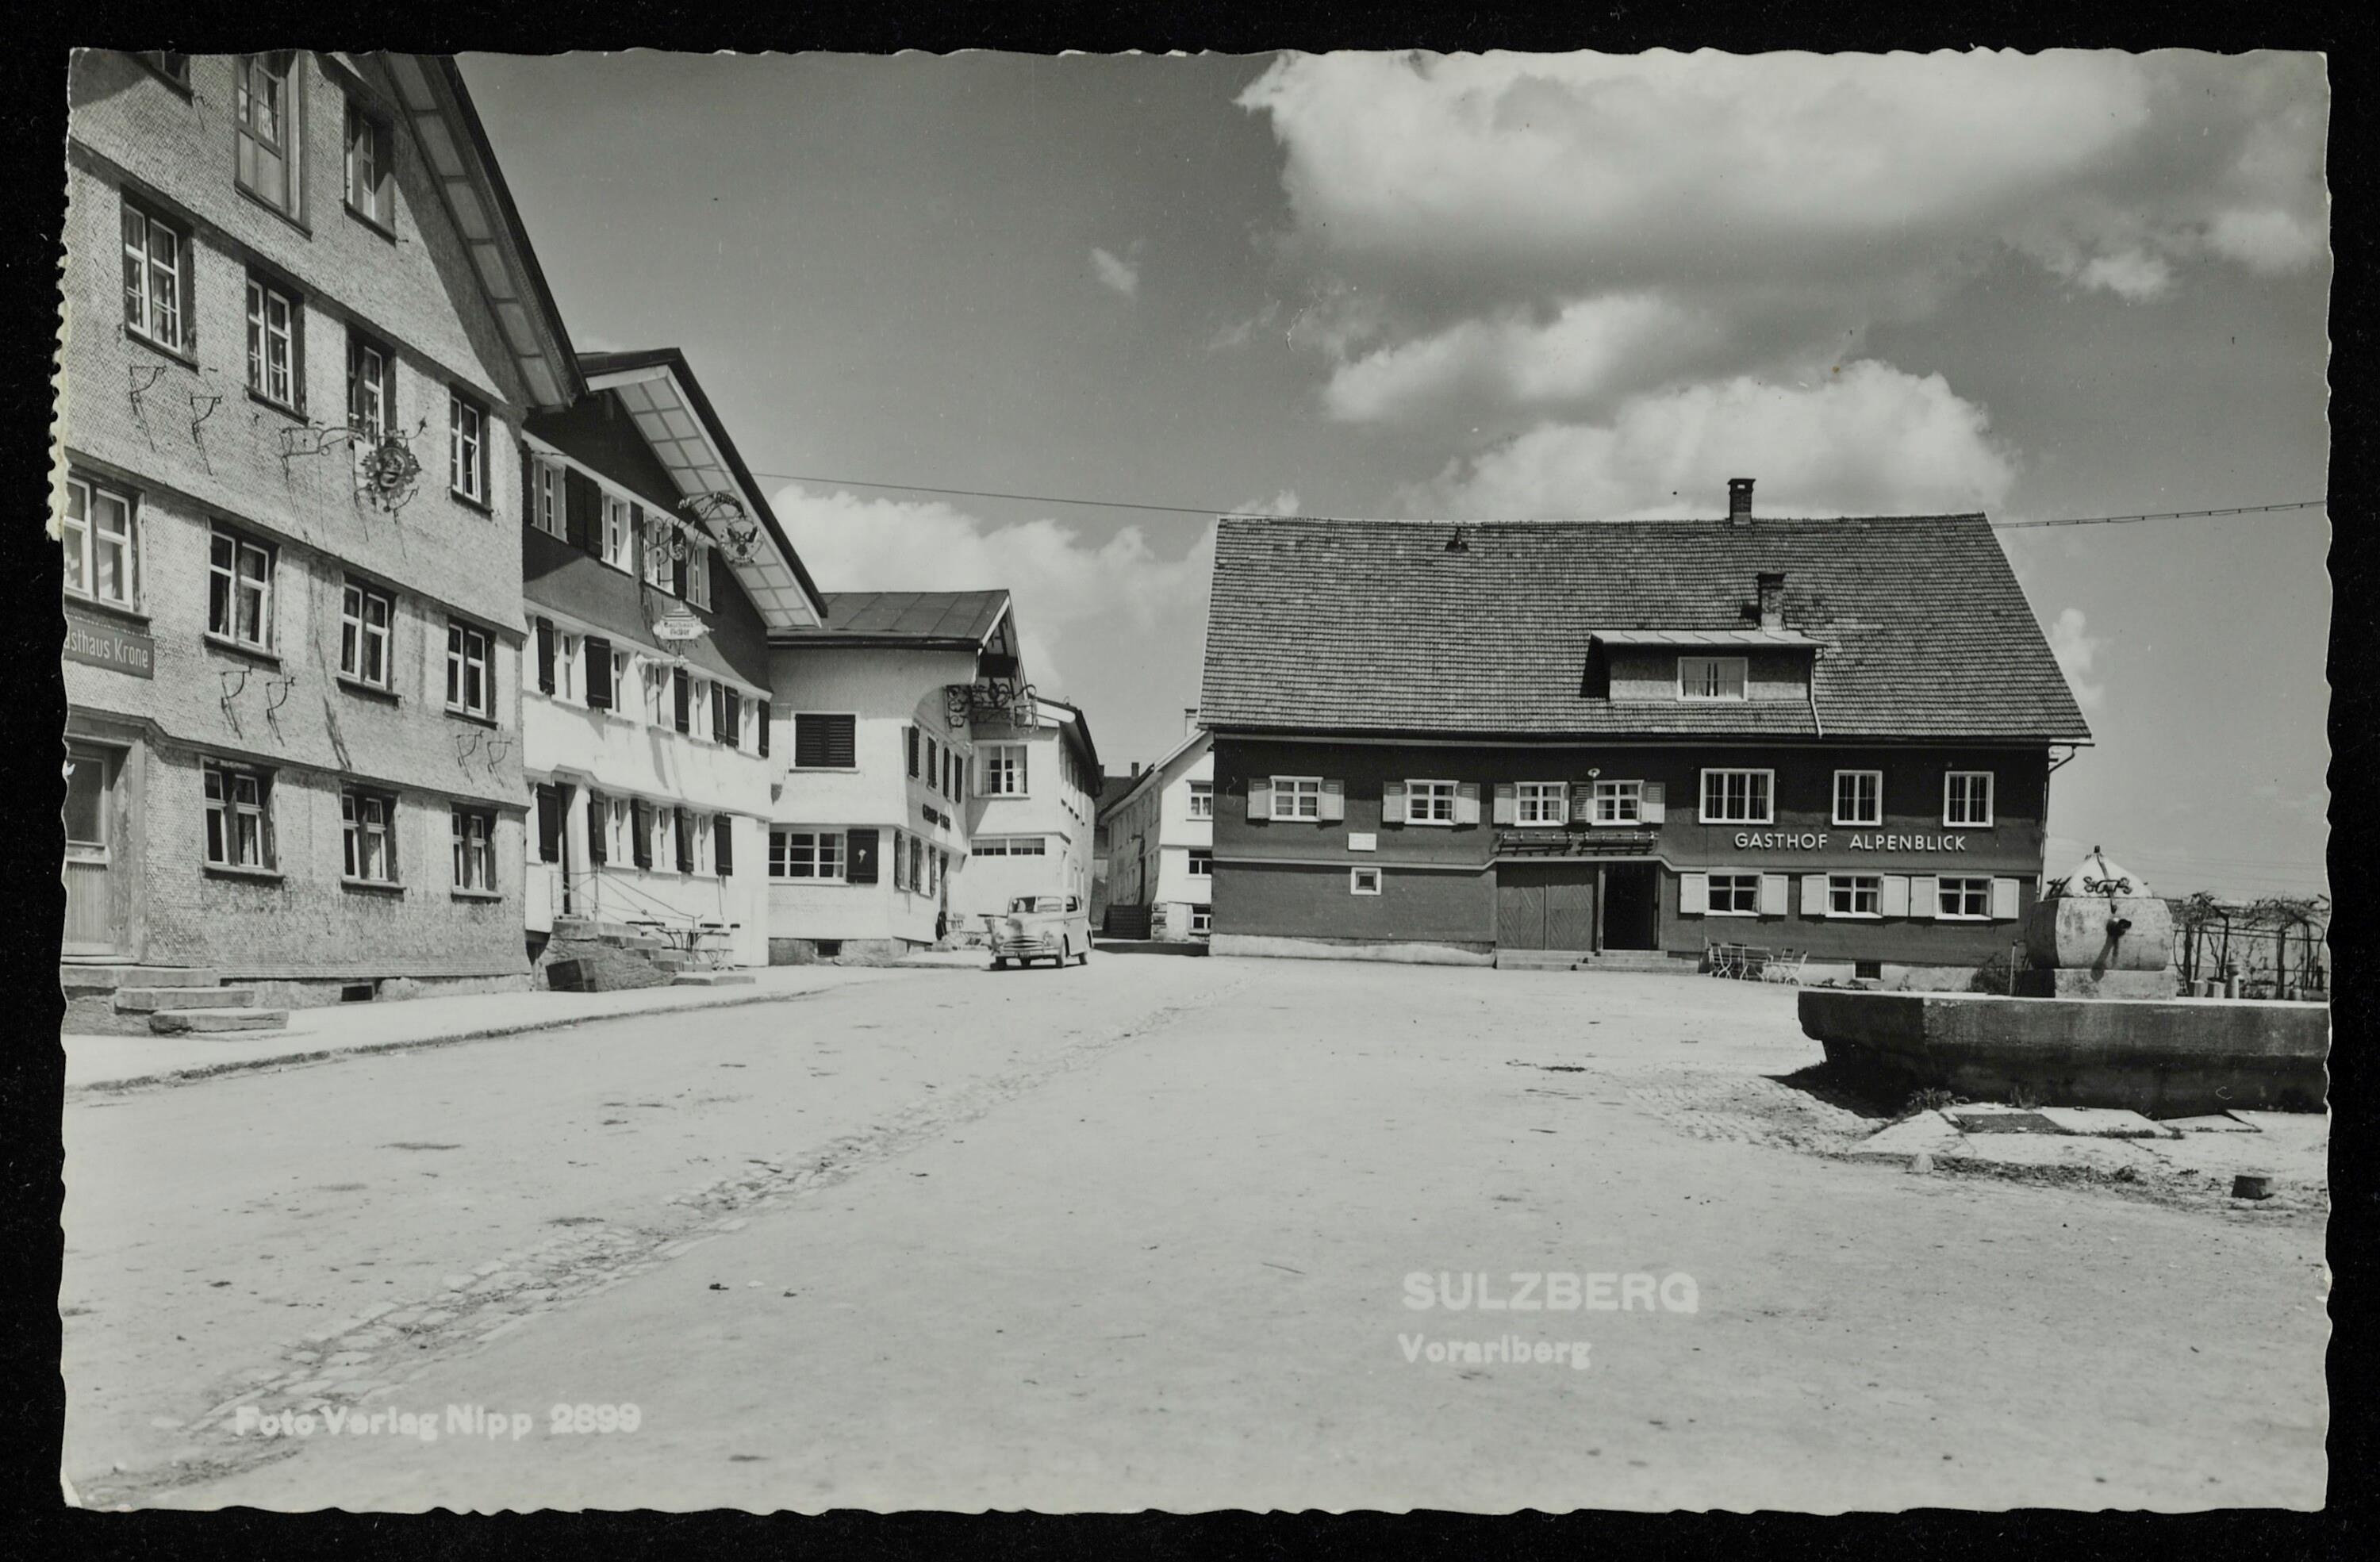 Sulzberg Vorarlberg></div>


    <hr>
    <div class=